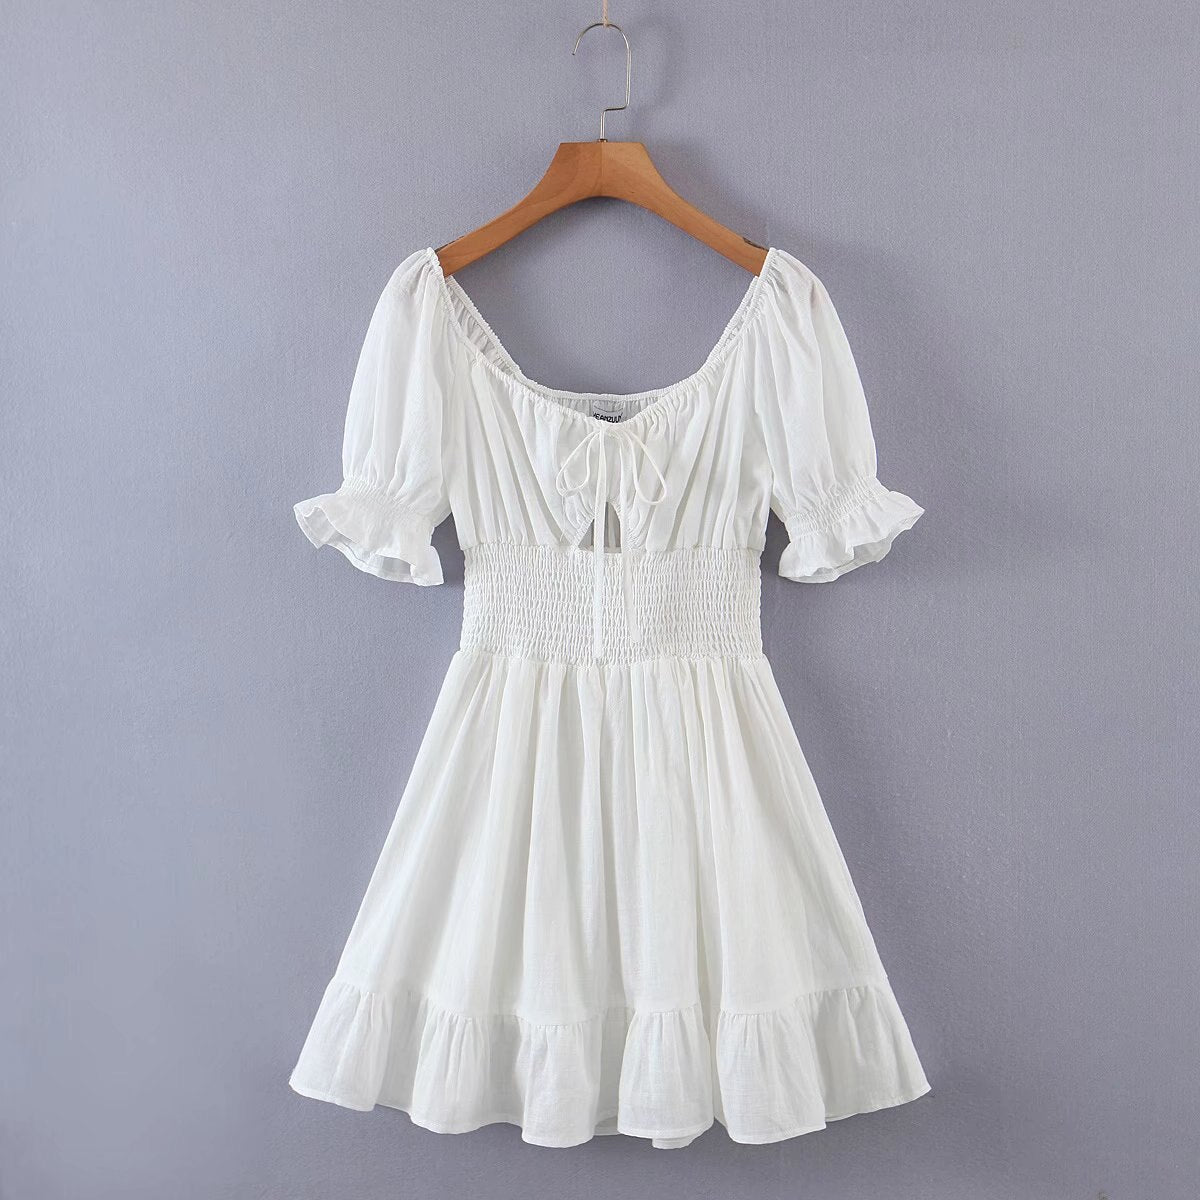 Voguable White Polka Dot Summer Beach Dress Women Puff Sleeve Vintage Ruffle A-line Backless Chiffon Short Dress Vestidos 2022 voguable